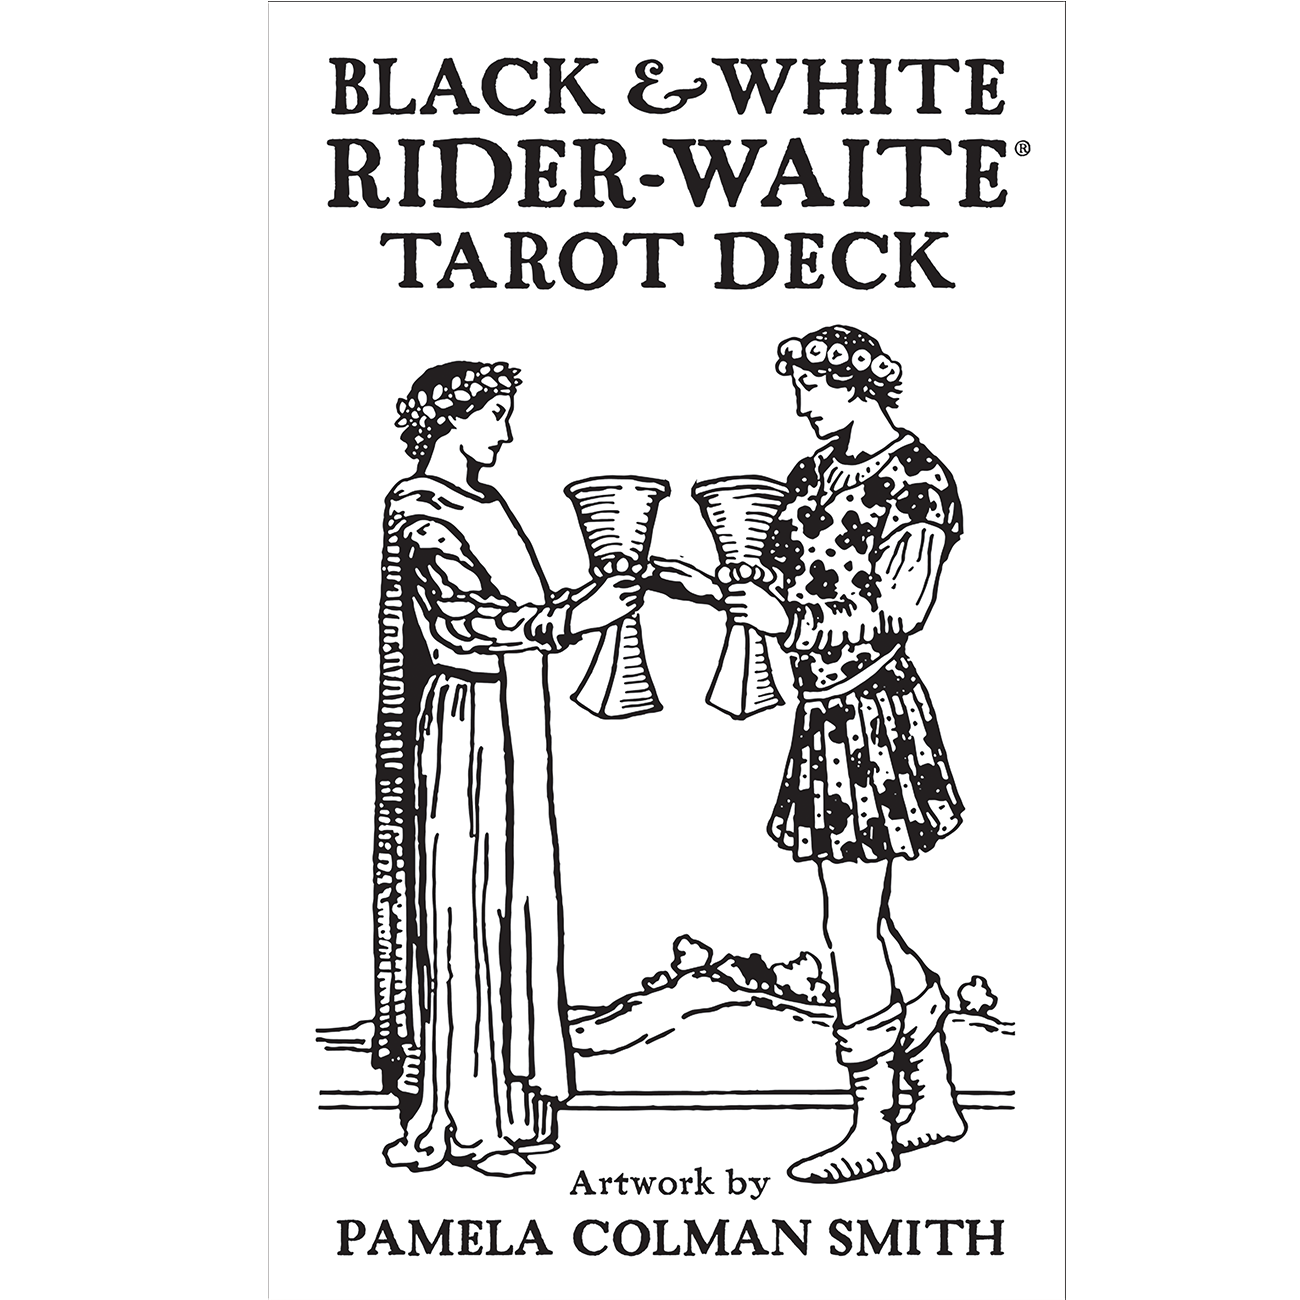 Black & White Rider-Waite Tarot Deck